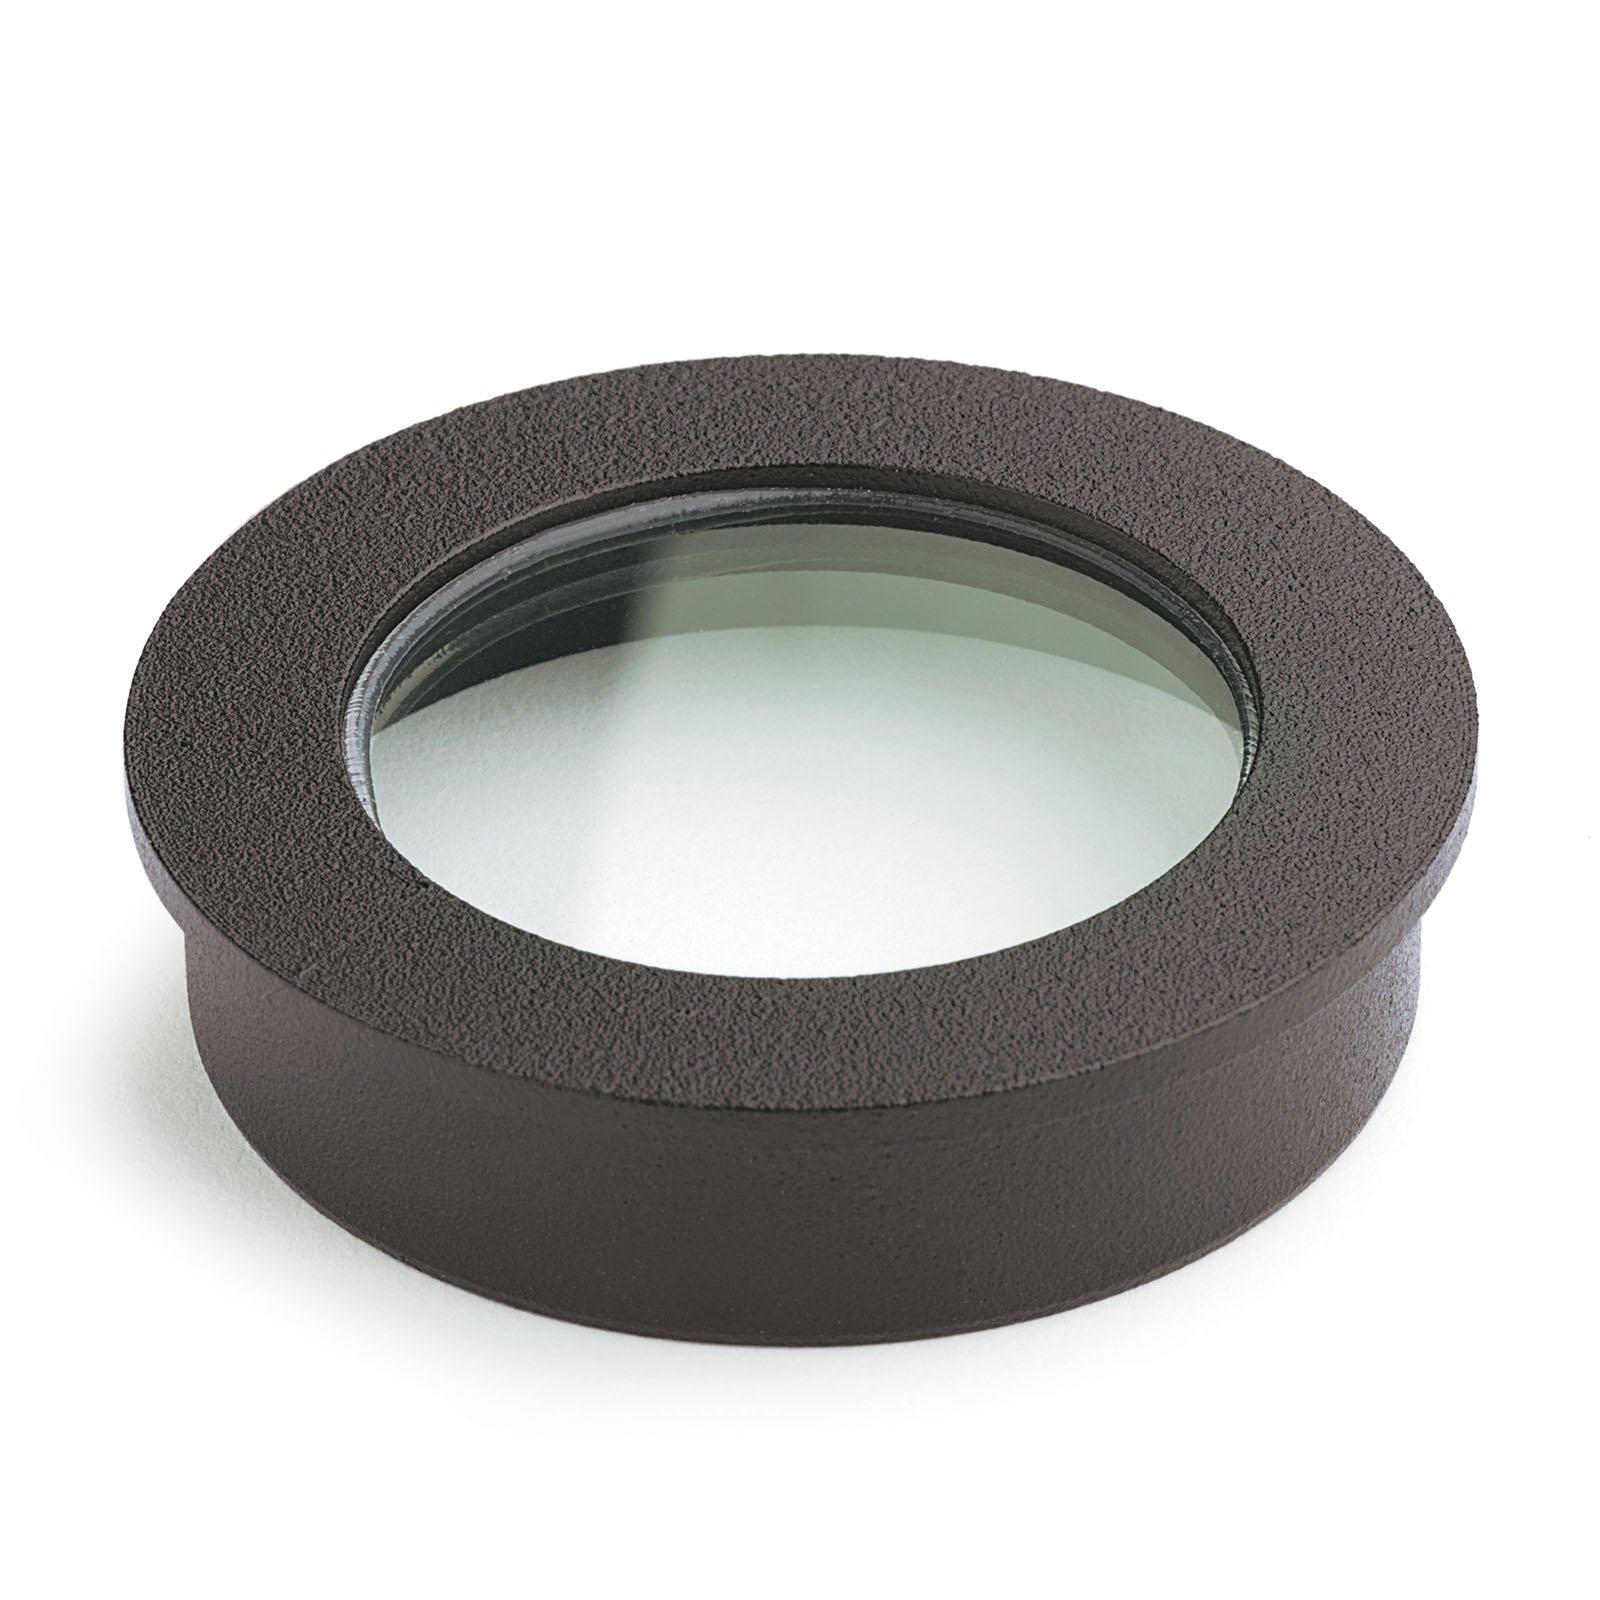 Heat Resistant Lens - Heat-resistant glass lens held in an aluminum ring